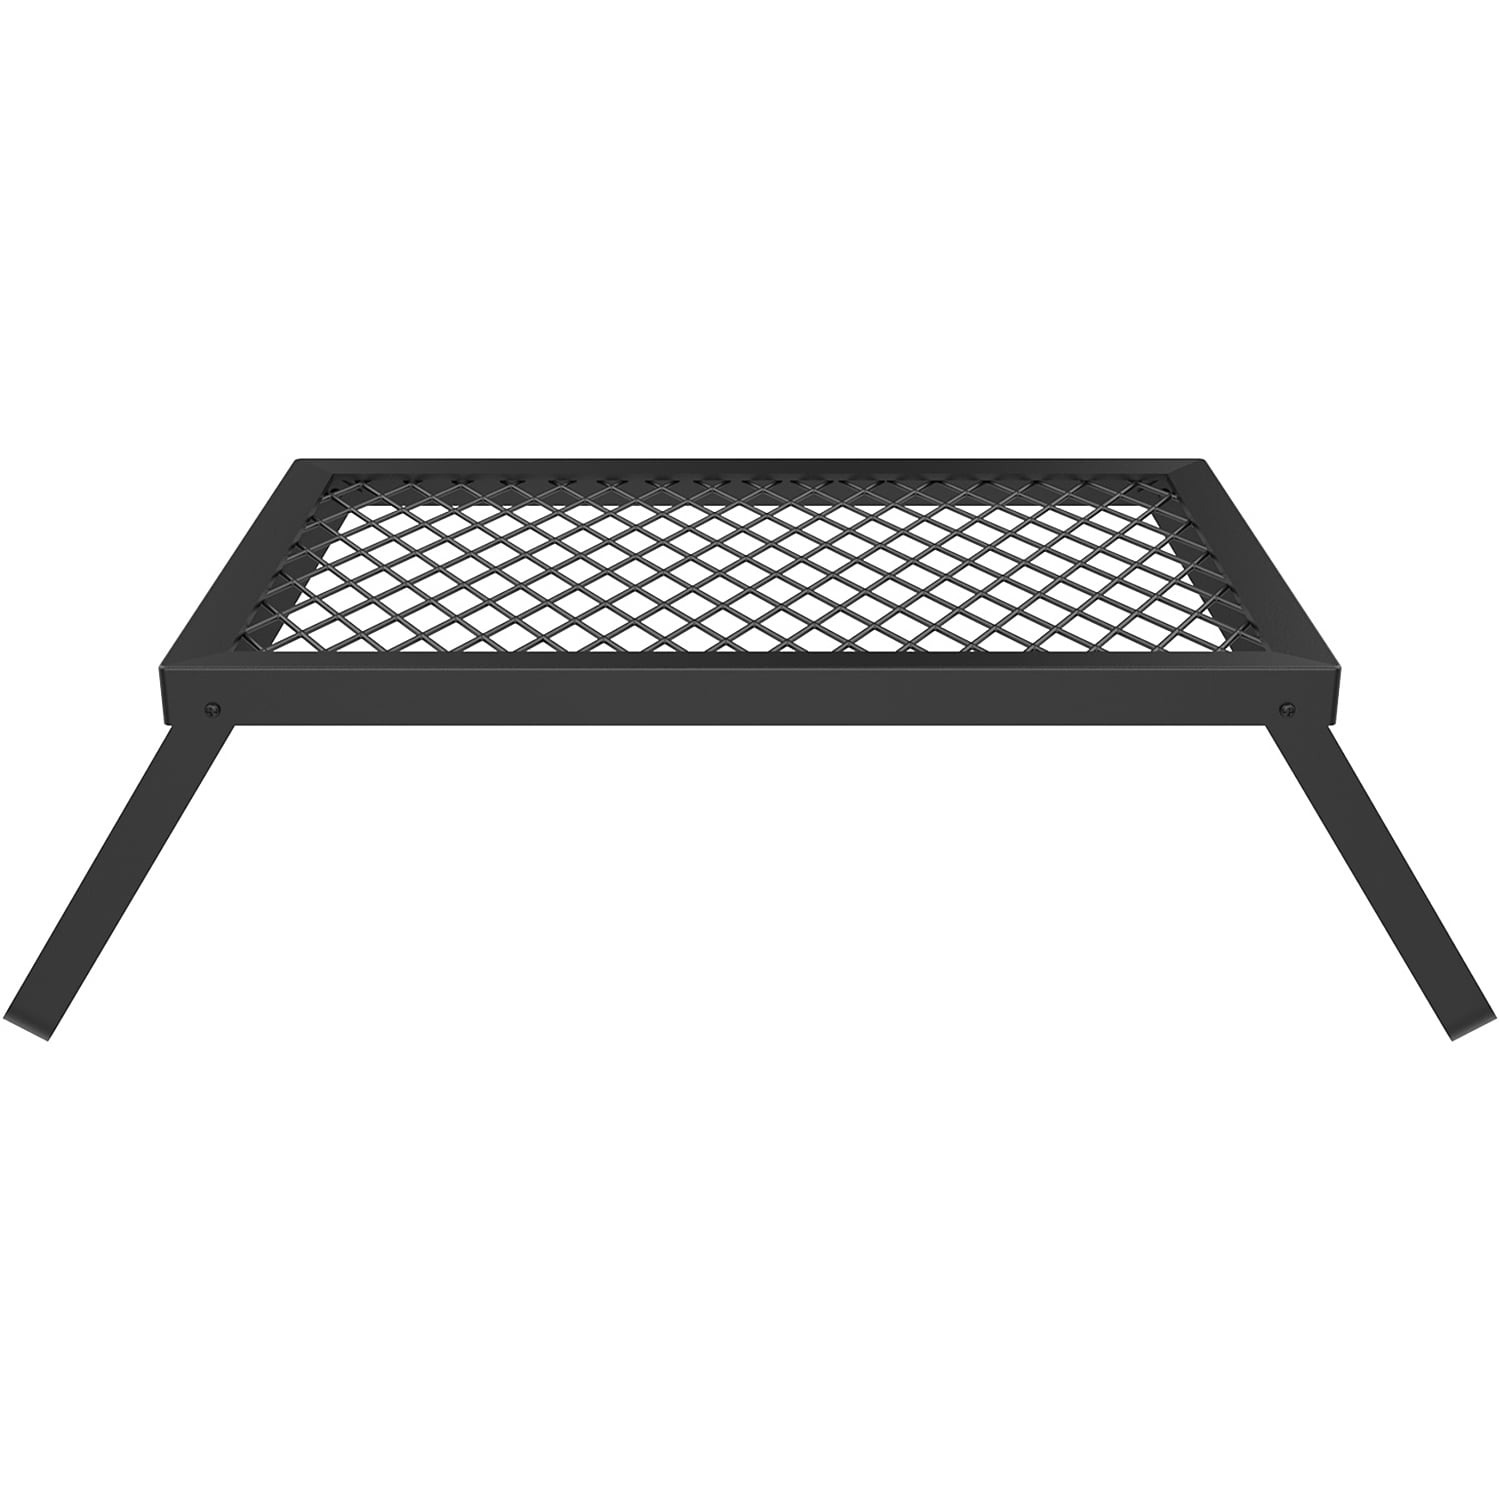 ELK Portable Folding Campfire Grill - Heavy Duty Stainless Steel